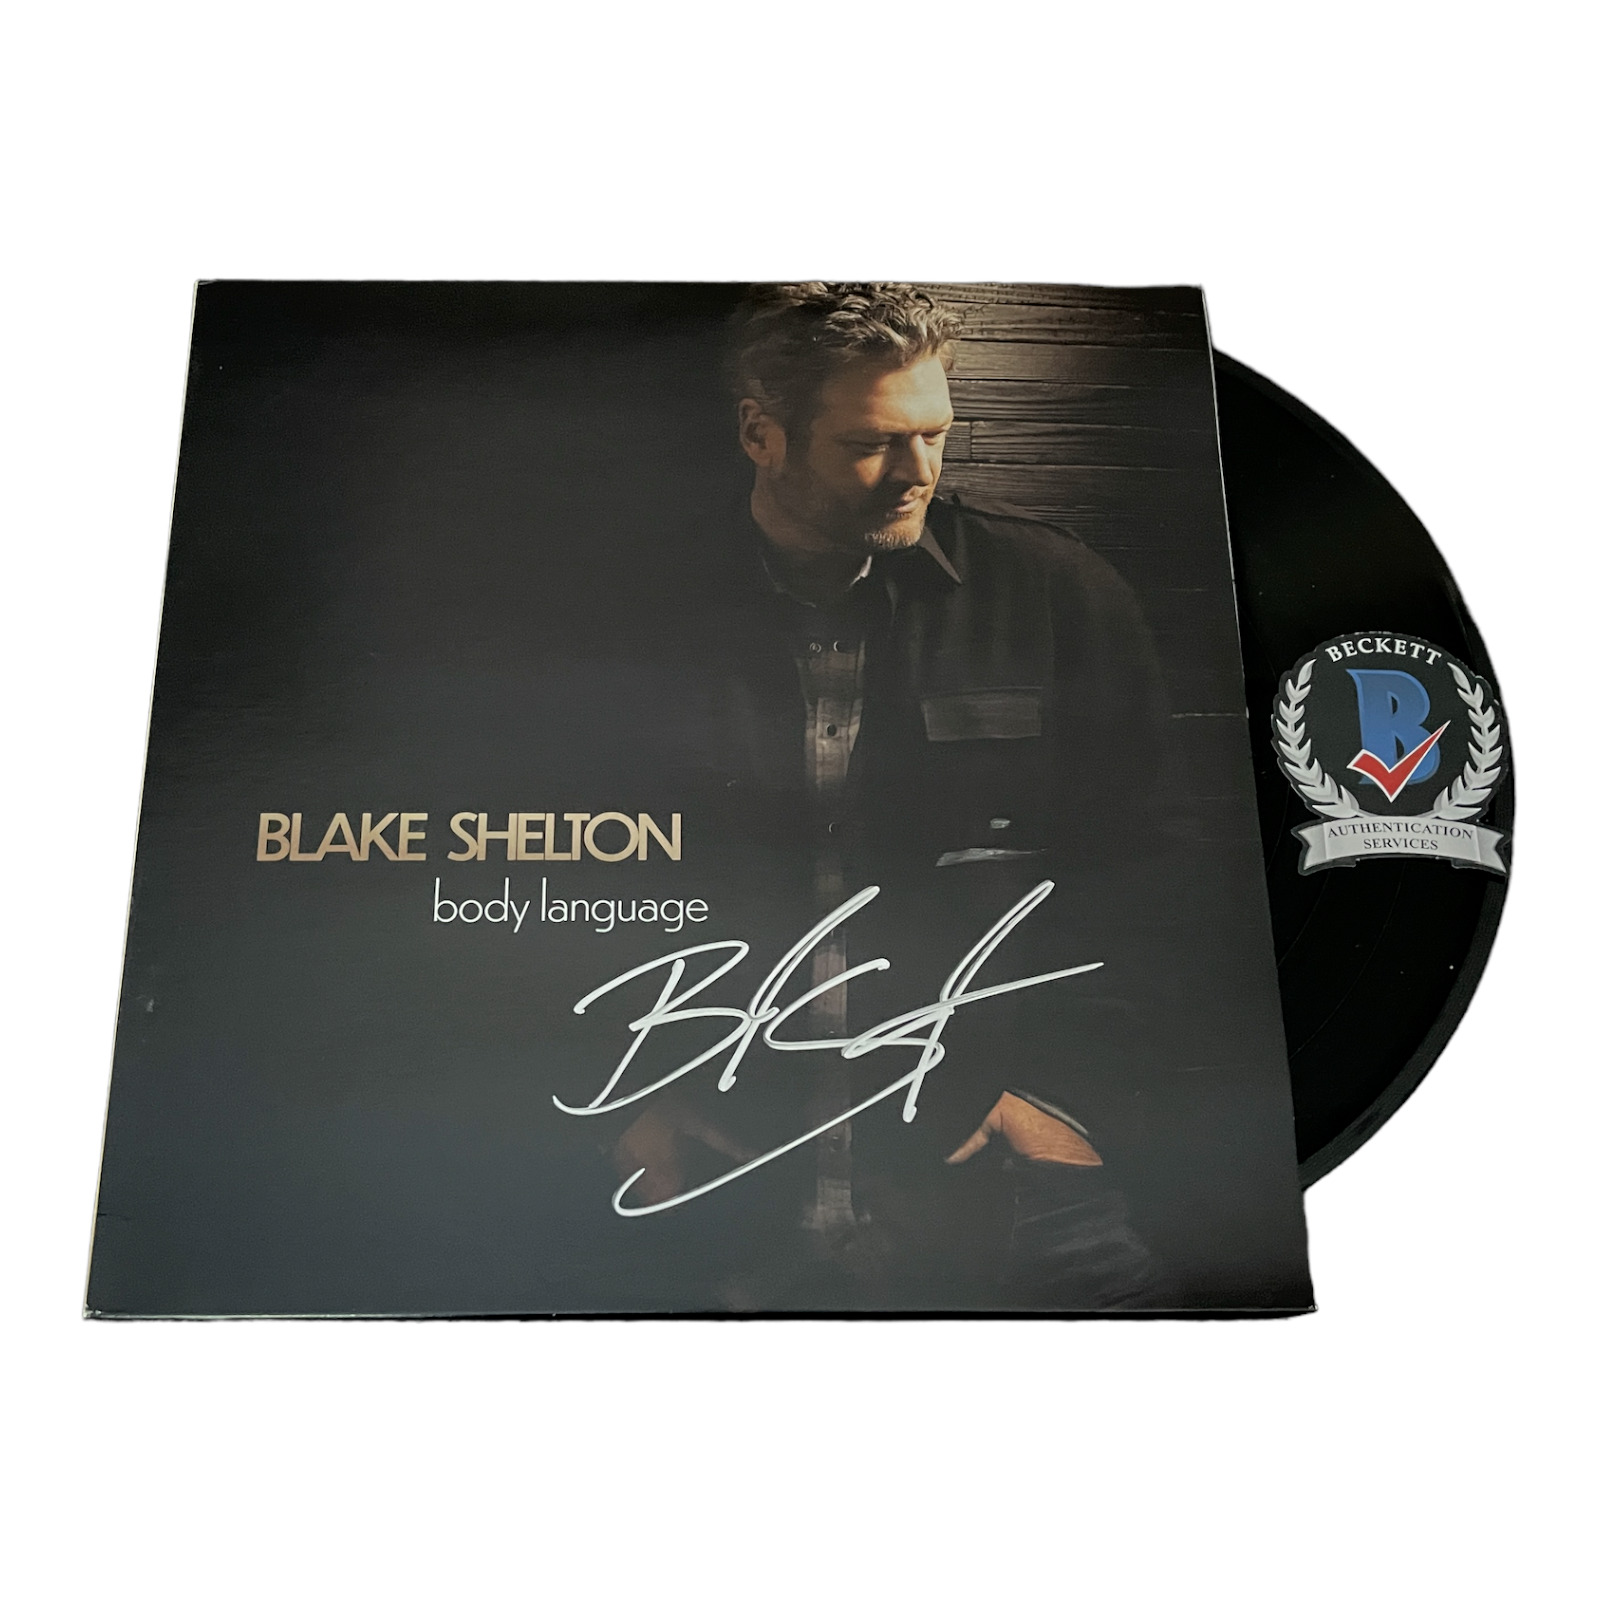 BLAKE SHELTON SIGNED AUTOGRAPH 'BODY LANGUAGE' LP VINYL BECKETT